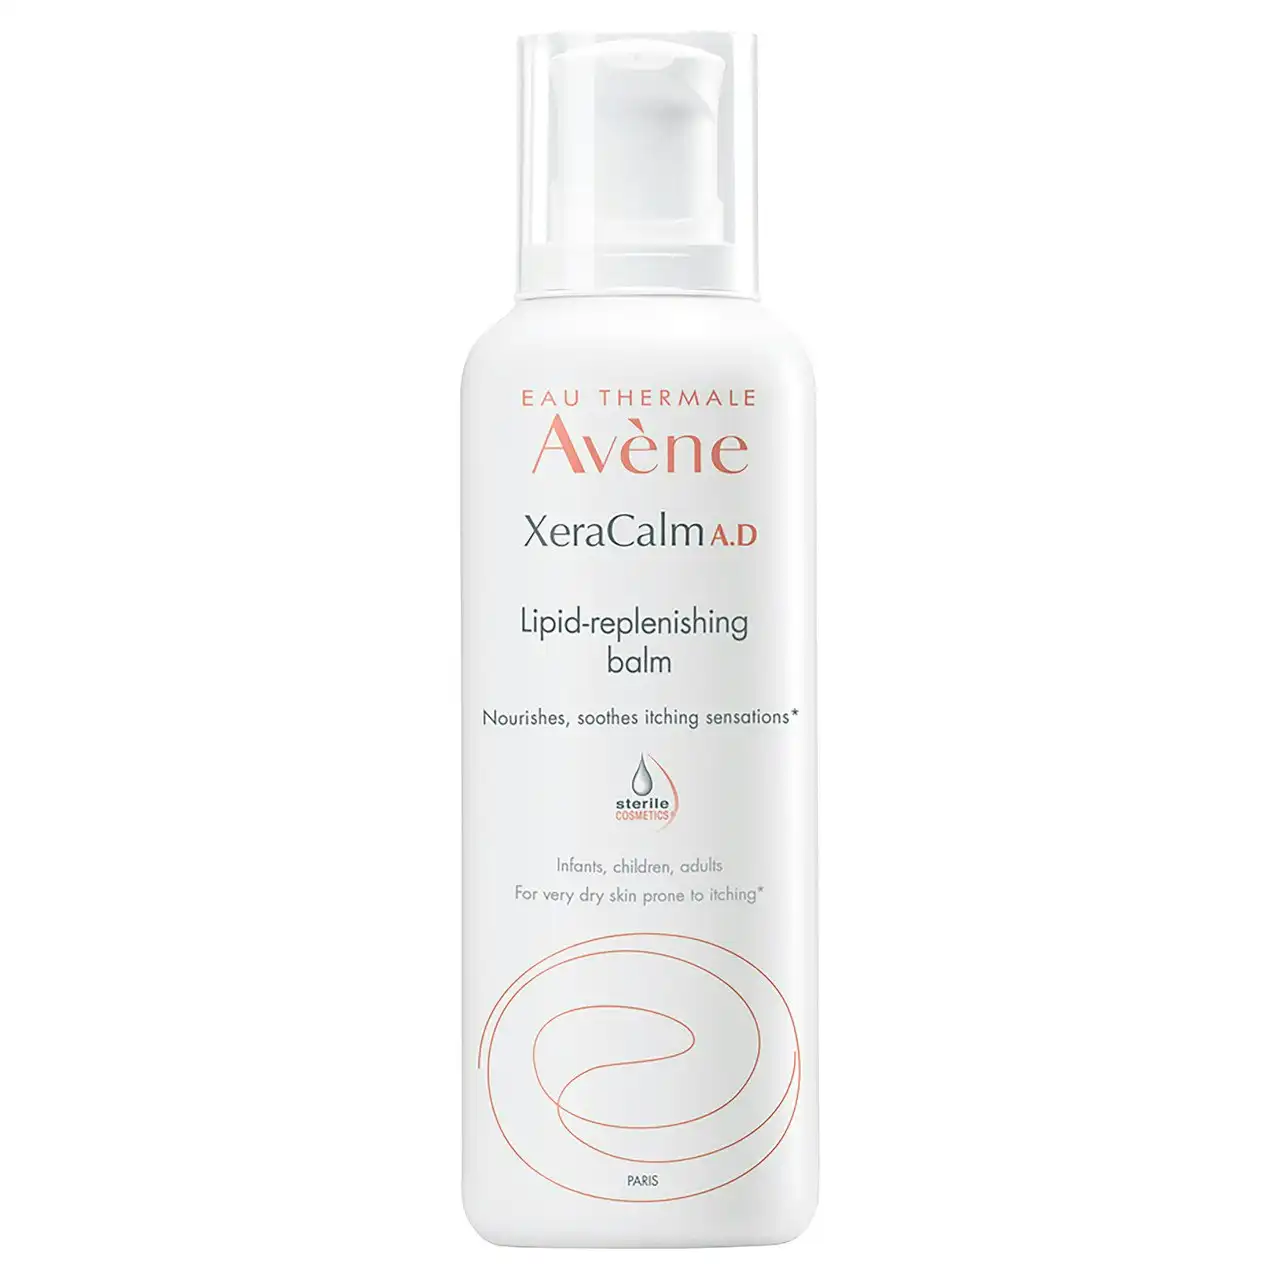 Avene XeraCalm A.D Balm 400ml - Moisturiser for eczema-prone skin